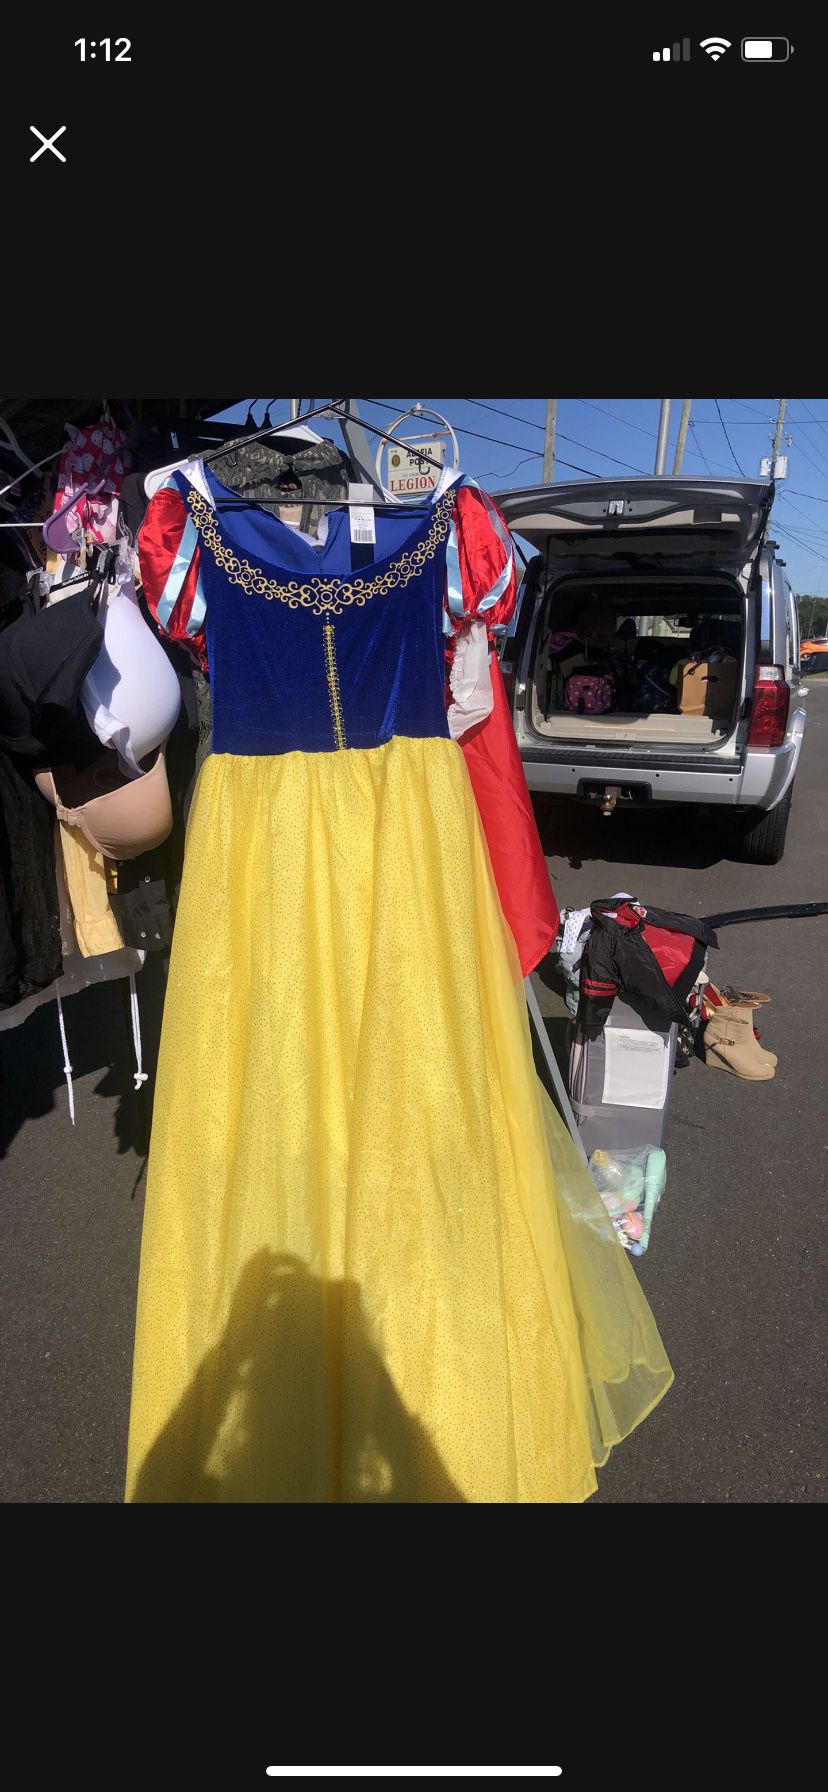 Princess Disney dress